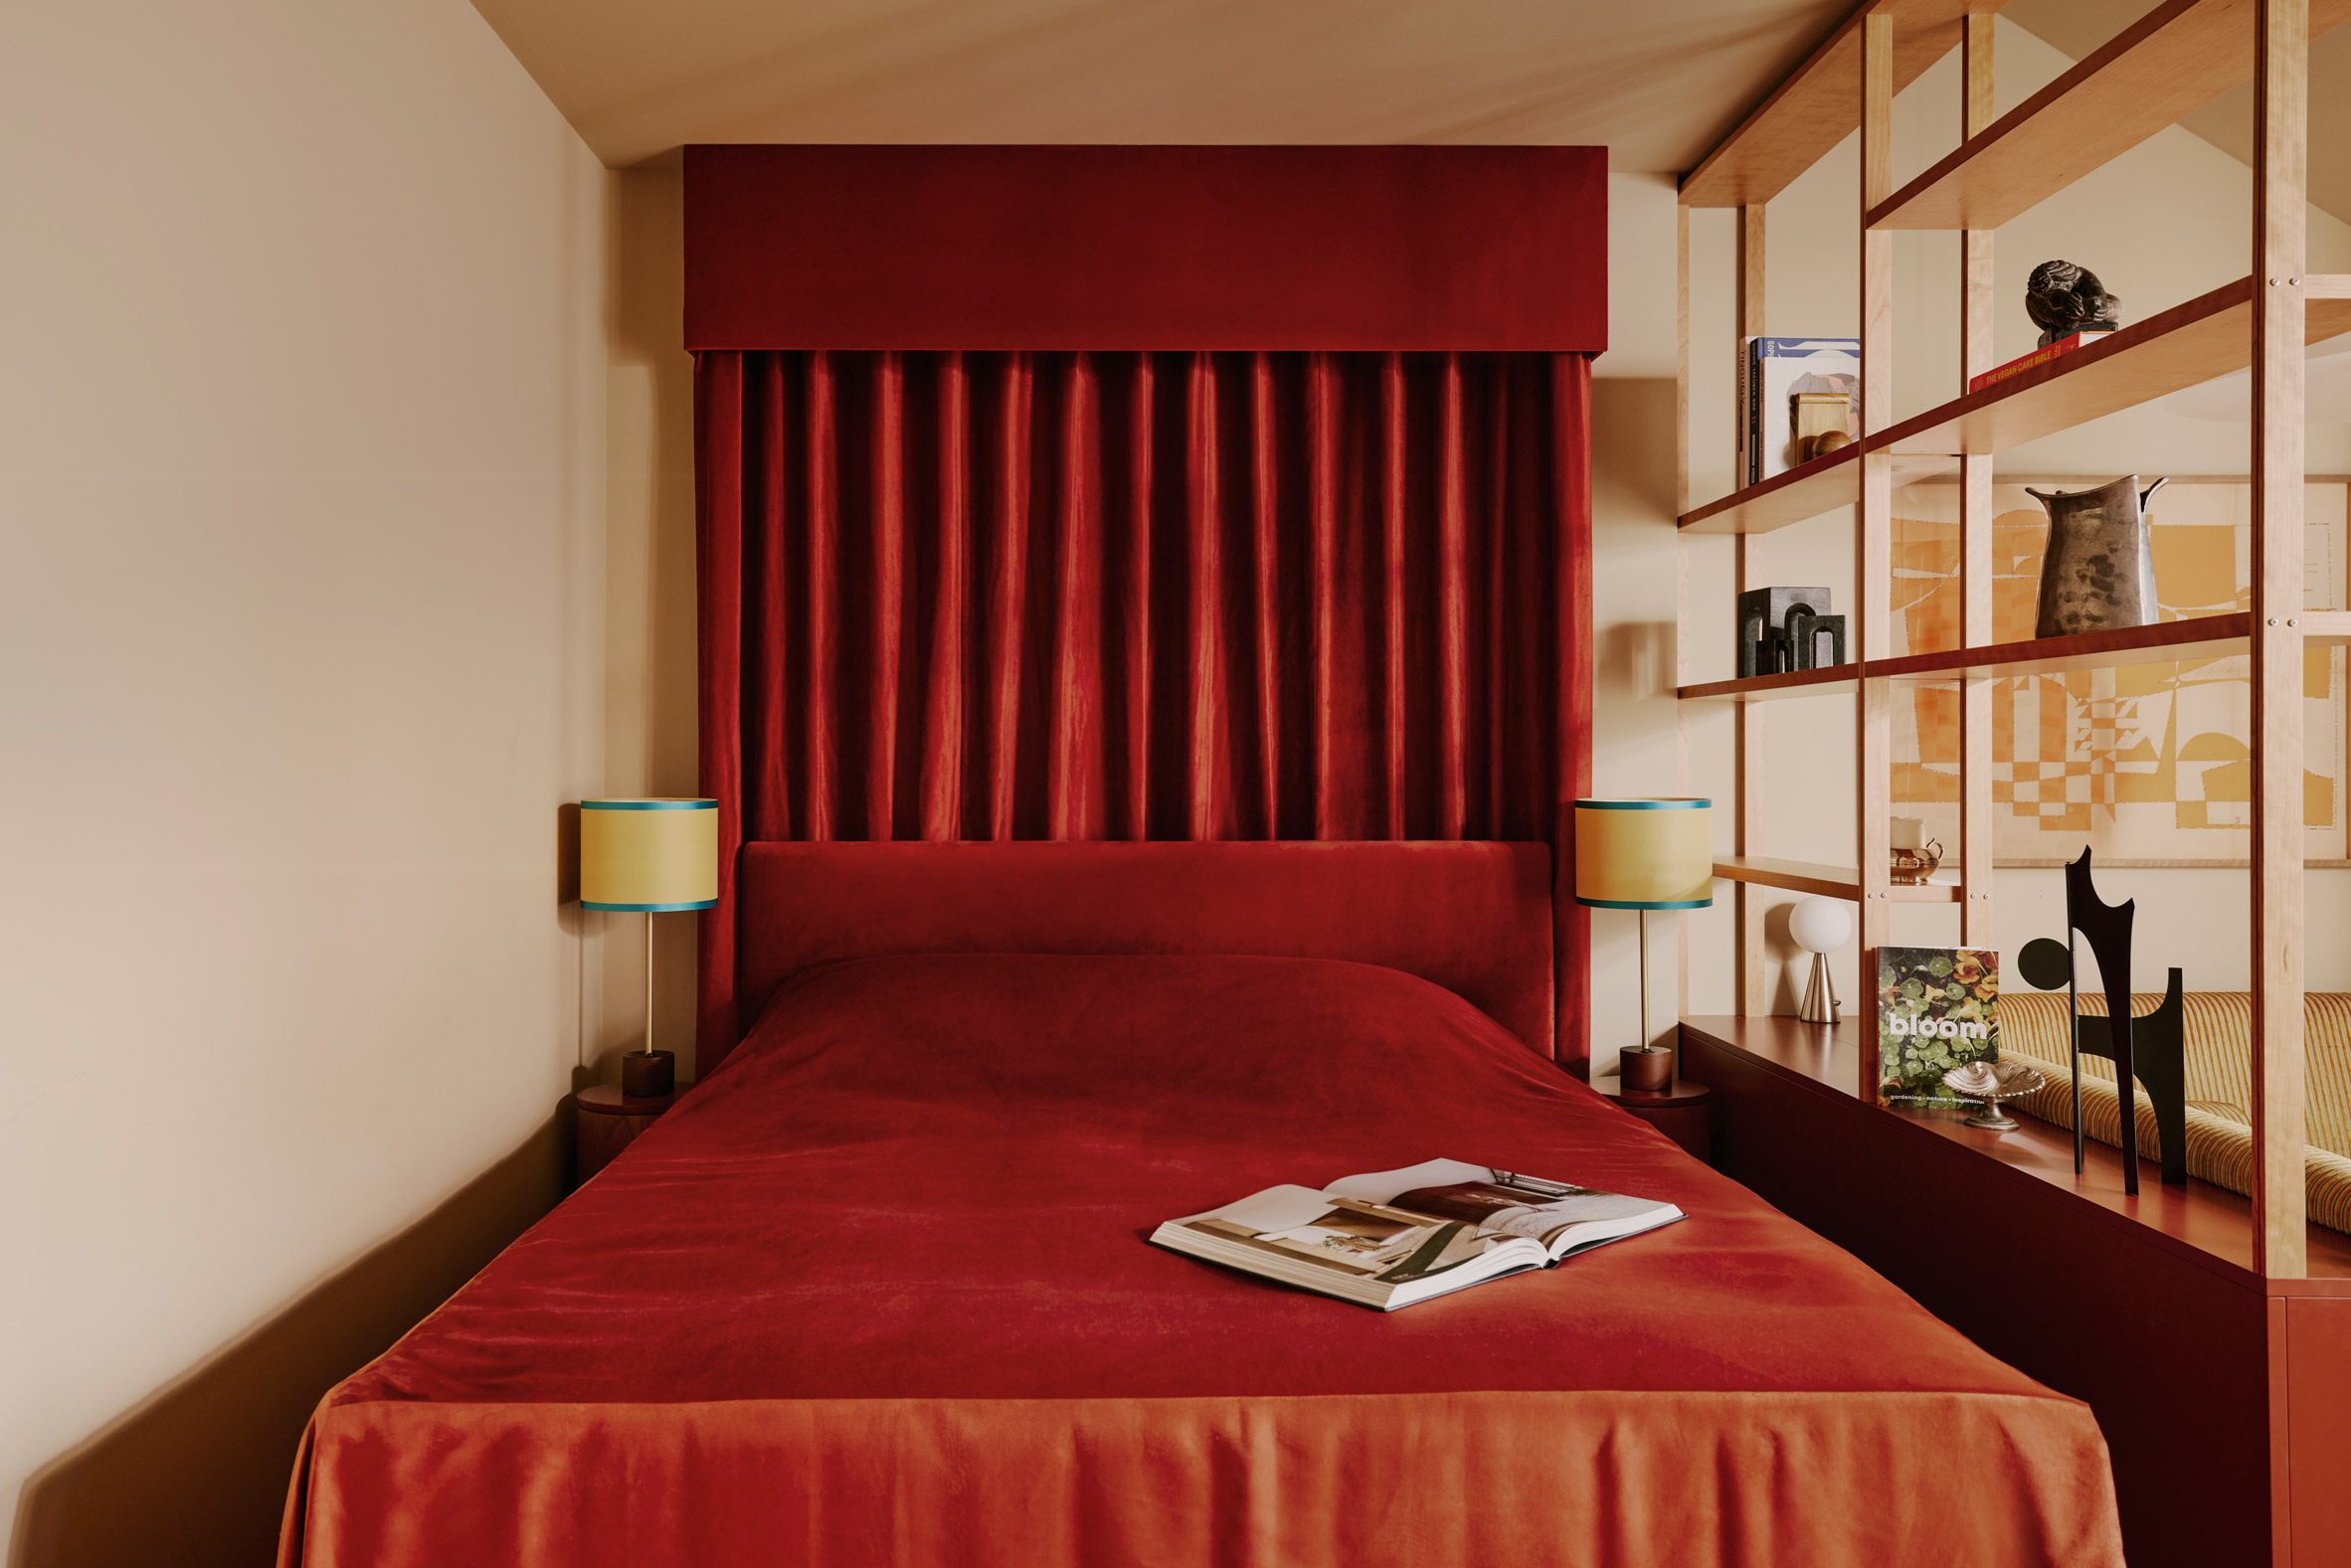 Red bedspread and curtains Locke am Platz